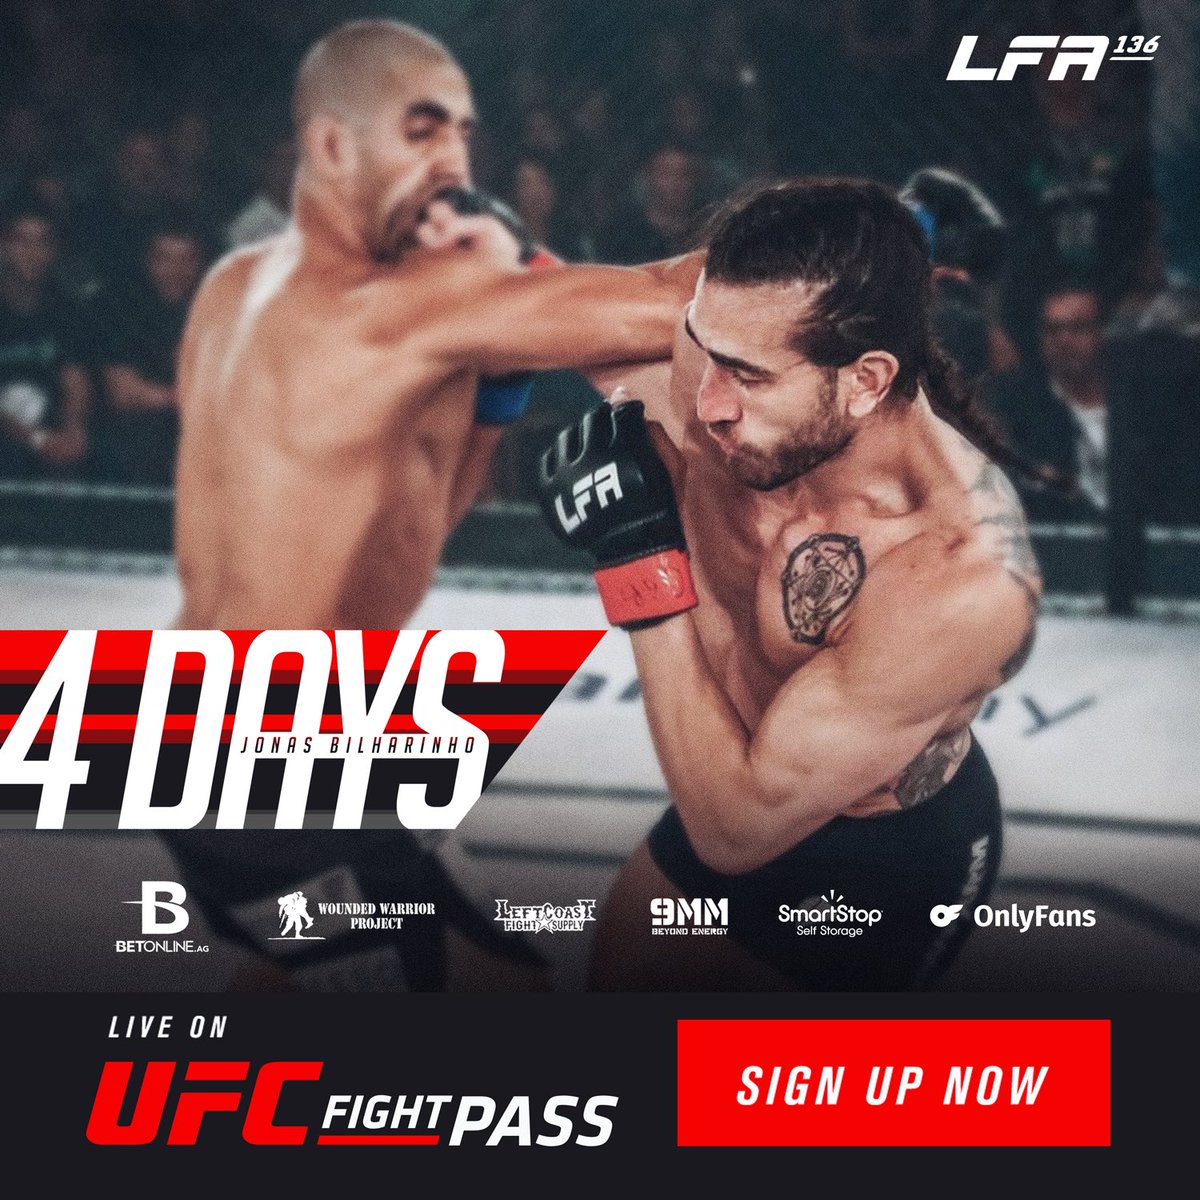 In 4 Days, knockout artist @JonasBilharinho returns to the @LFAfighting Octagon at #LFA136! 💥 Friday, July 15 #CEMUG #Caraguatatuba, #SaoPaulo, #Brazil #MMA #LFANation @UFCFightPass